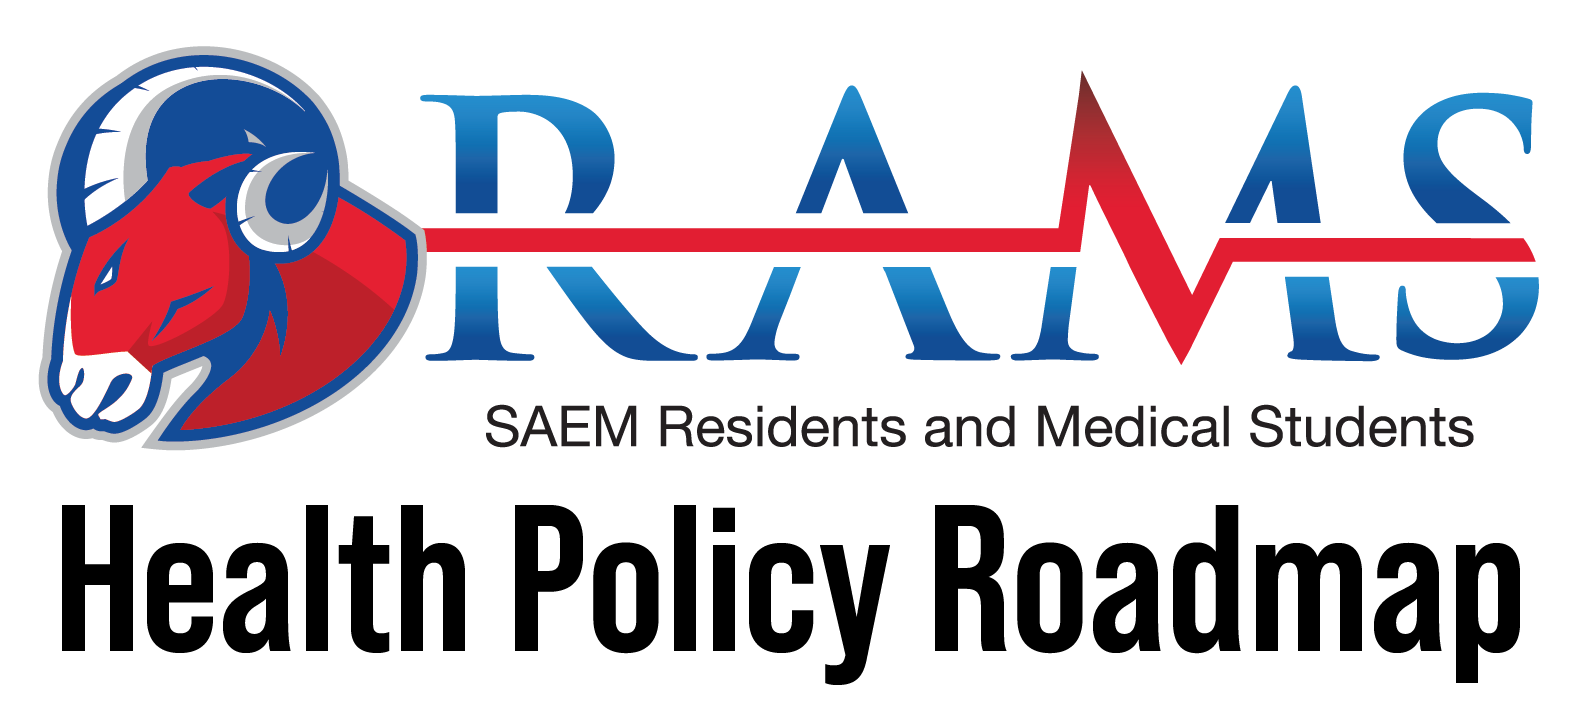 RAMS Health Policy Roadmap logo